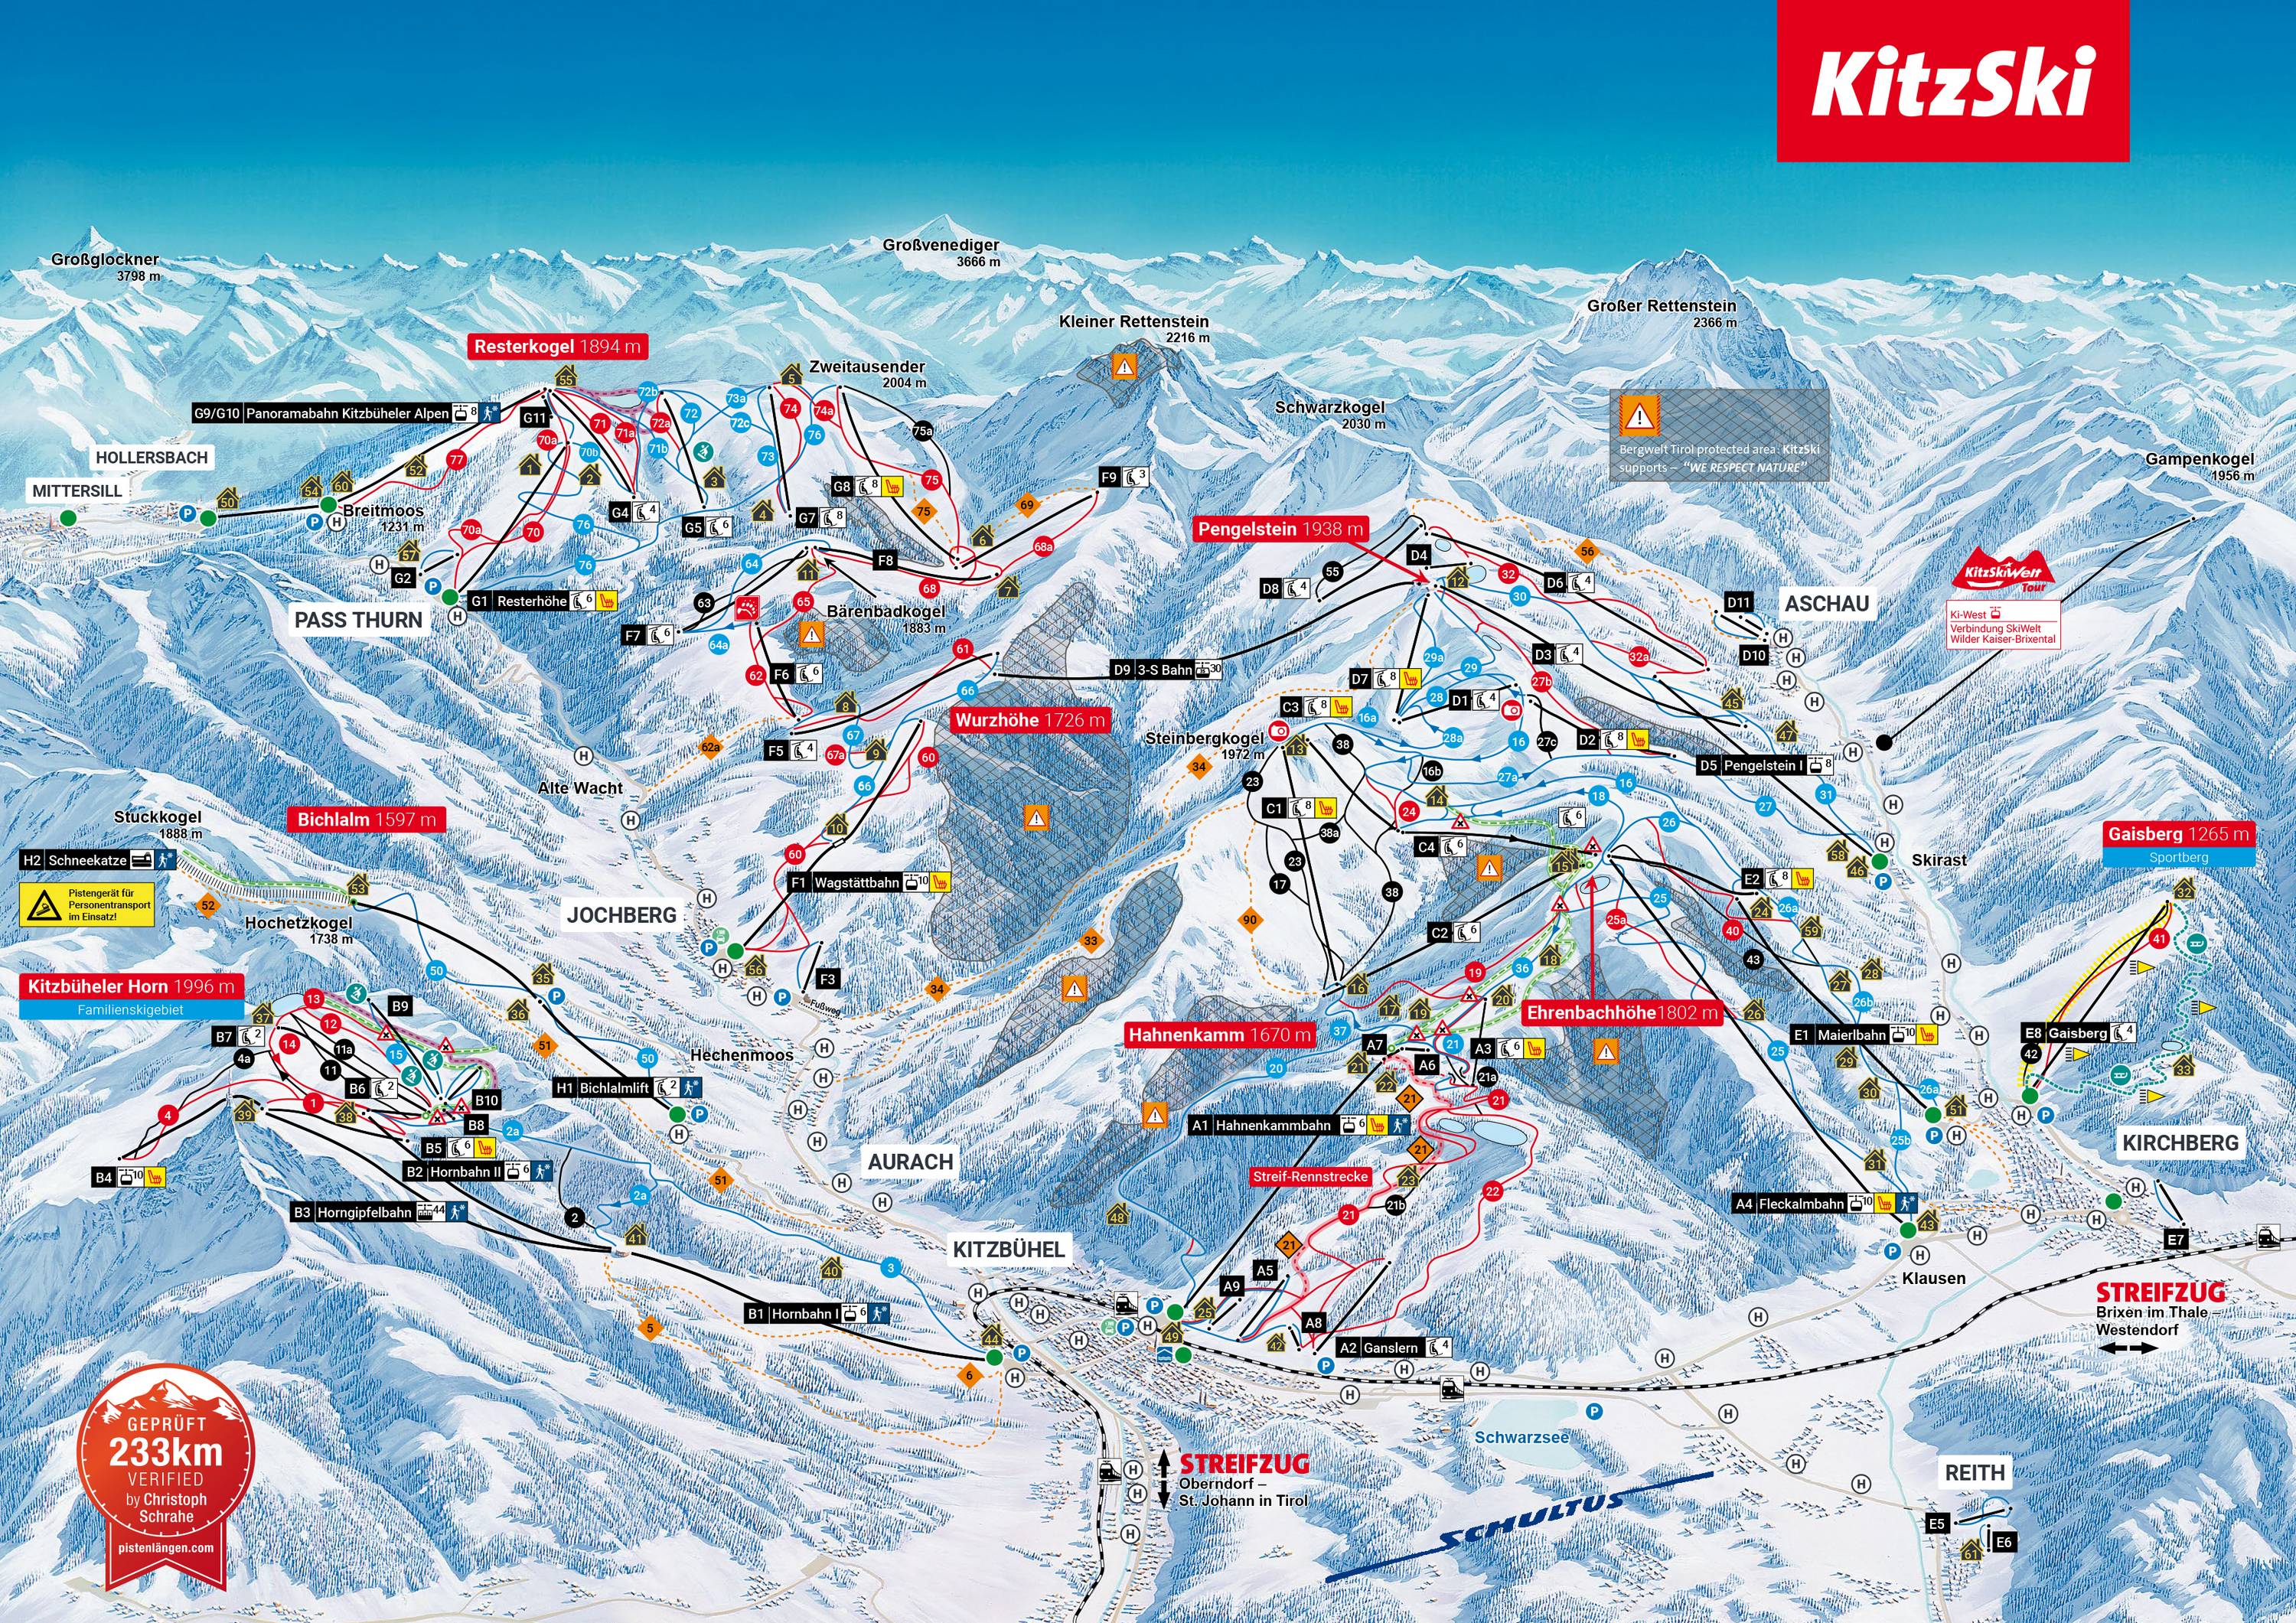 KitzSki – Kitzbühel / Kirchberg